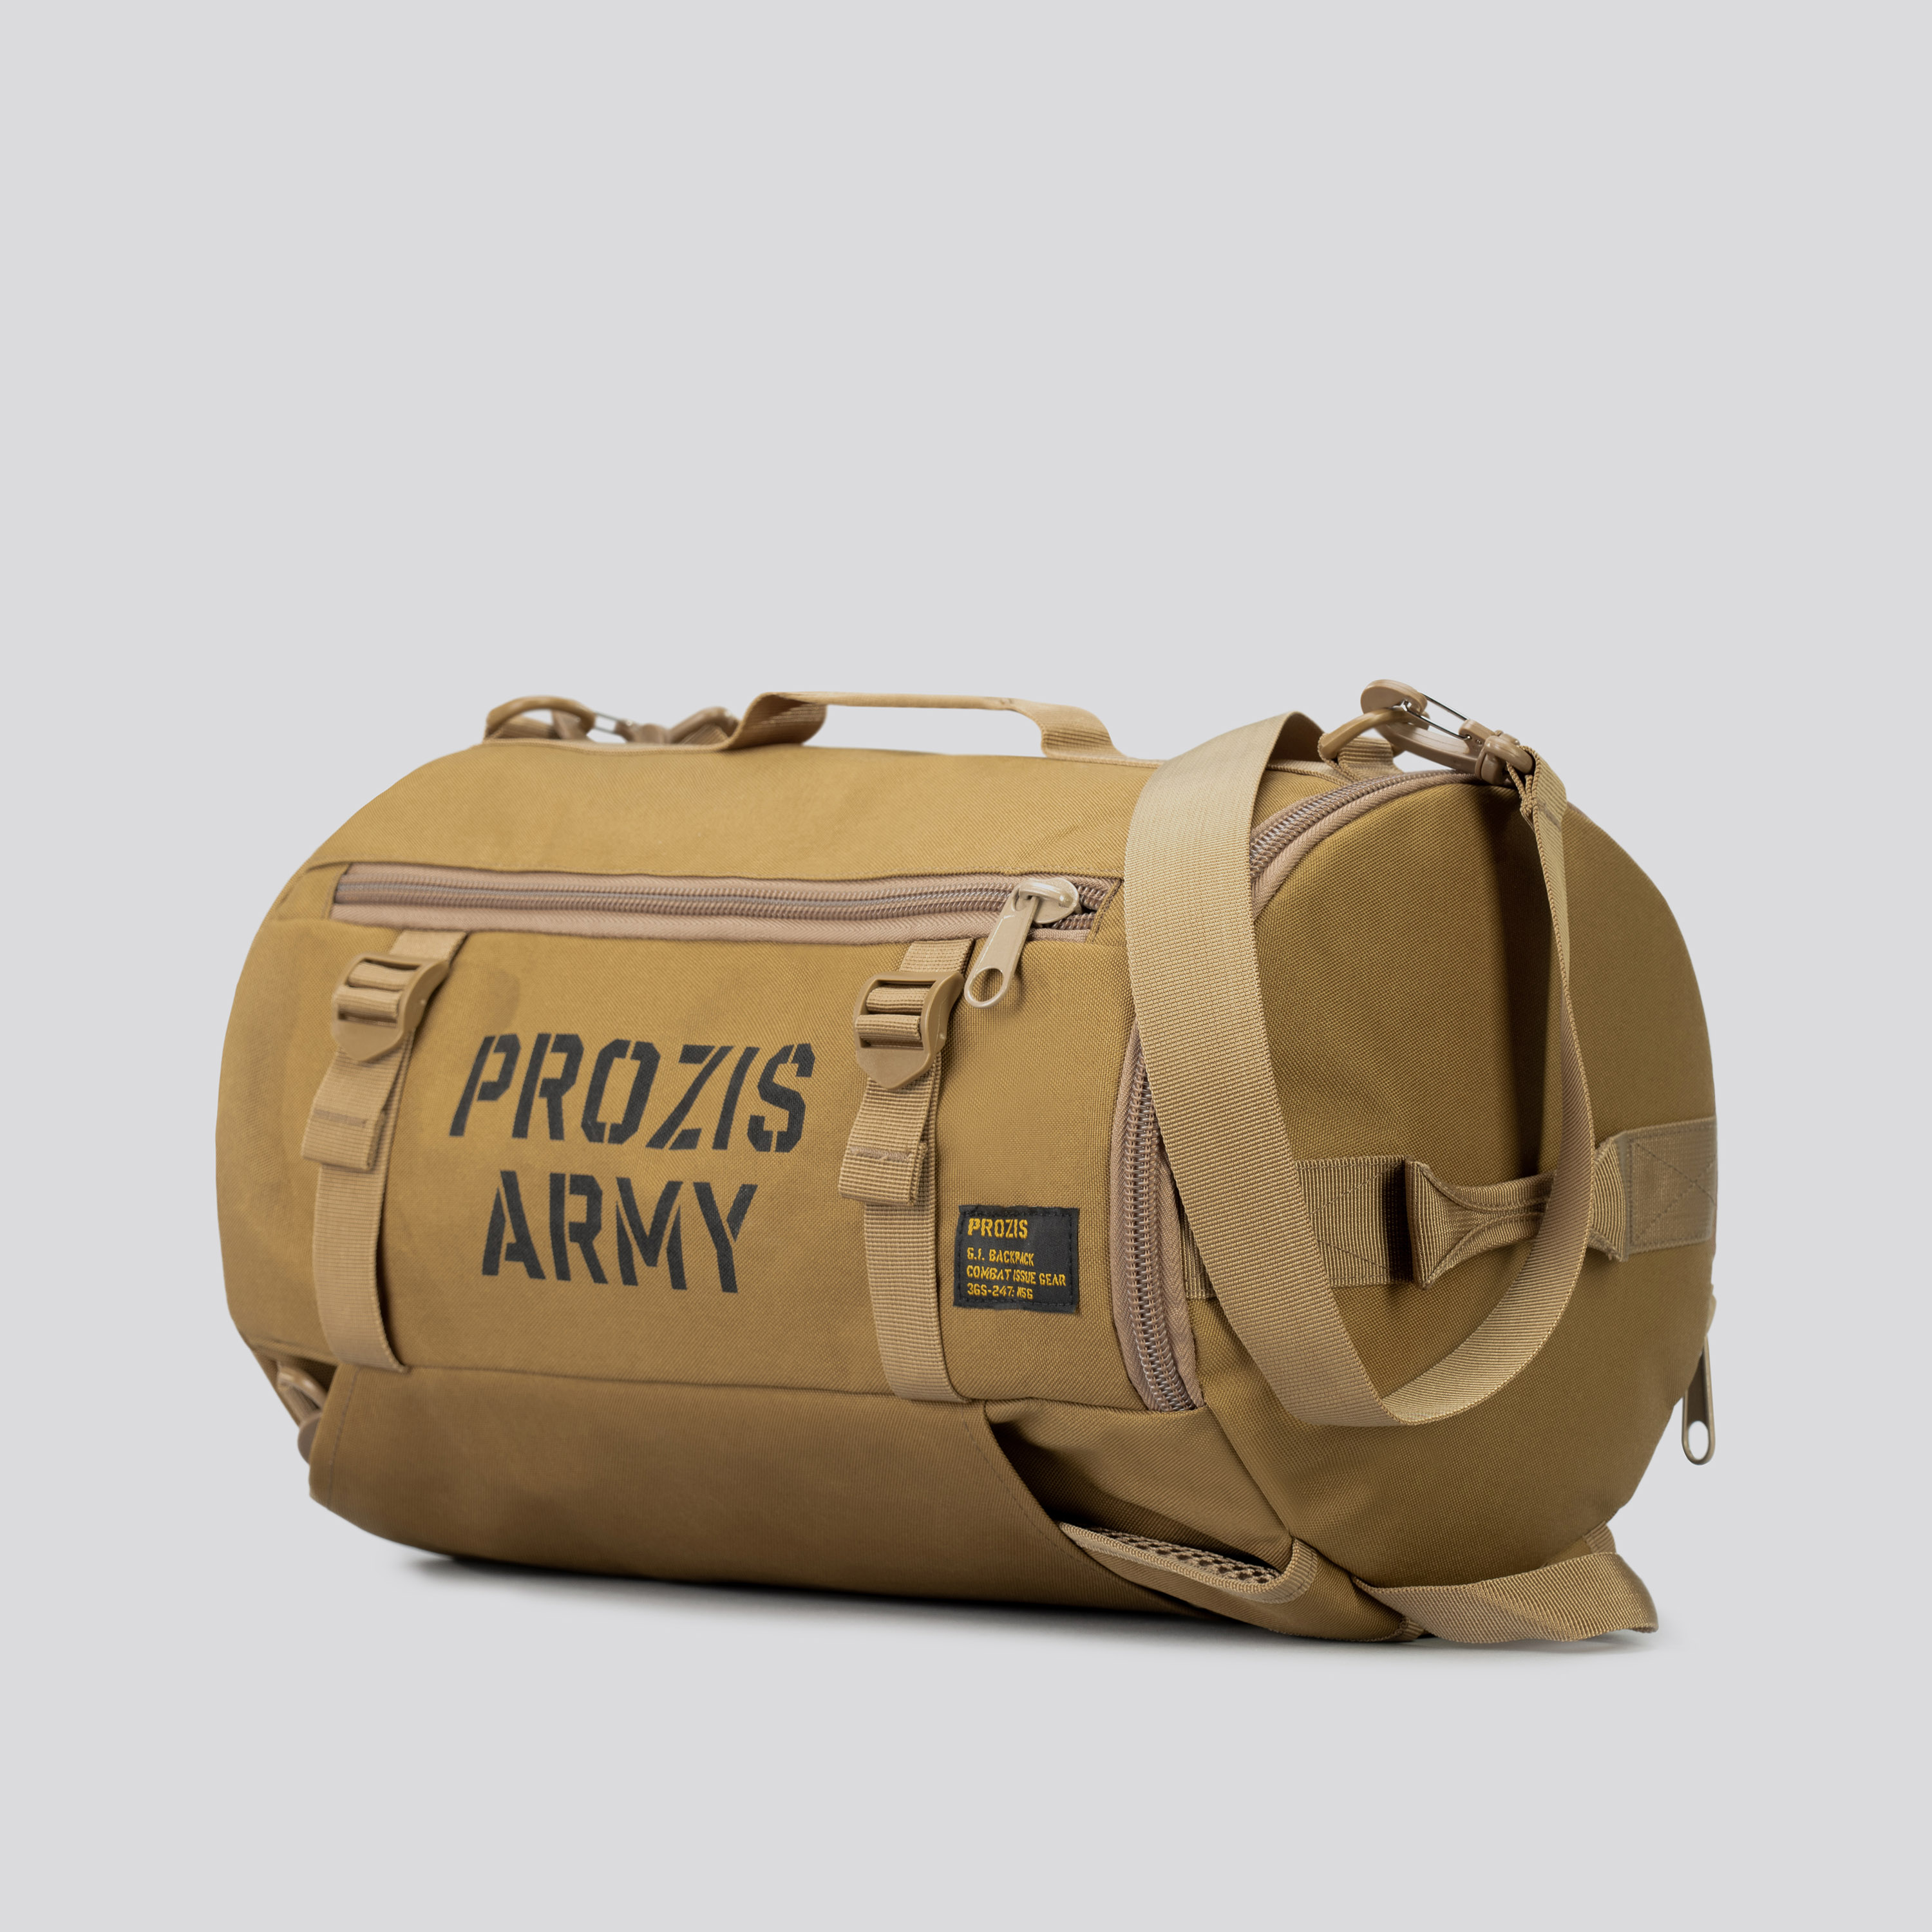 Tactical Duffle Bag Men Waterproof Military Travel Sports Duffle Bag Backpack Rucksack Molle Army Cylinder Bag Buy Tactical Duffle Bag Sports Duffle Bag Duffle Bag Backpack Product On Alibaba Com